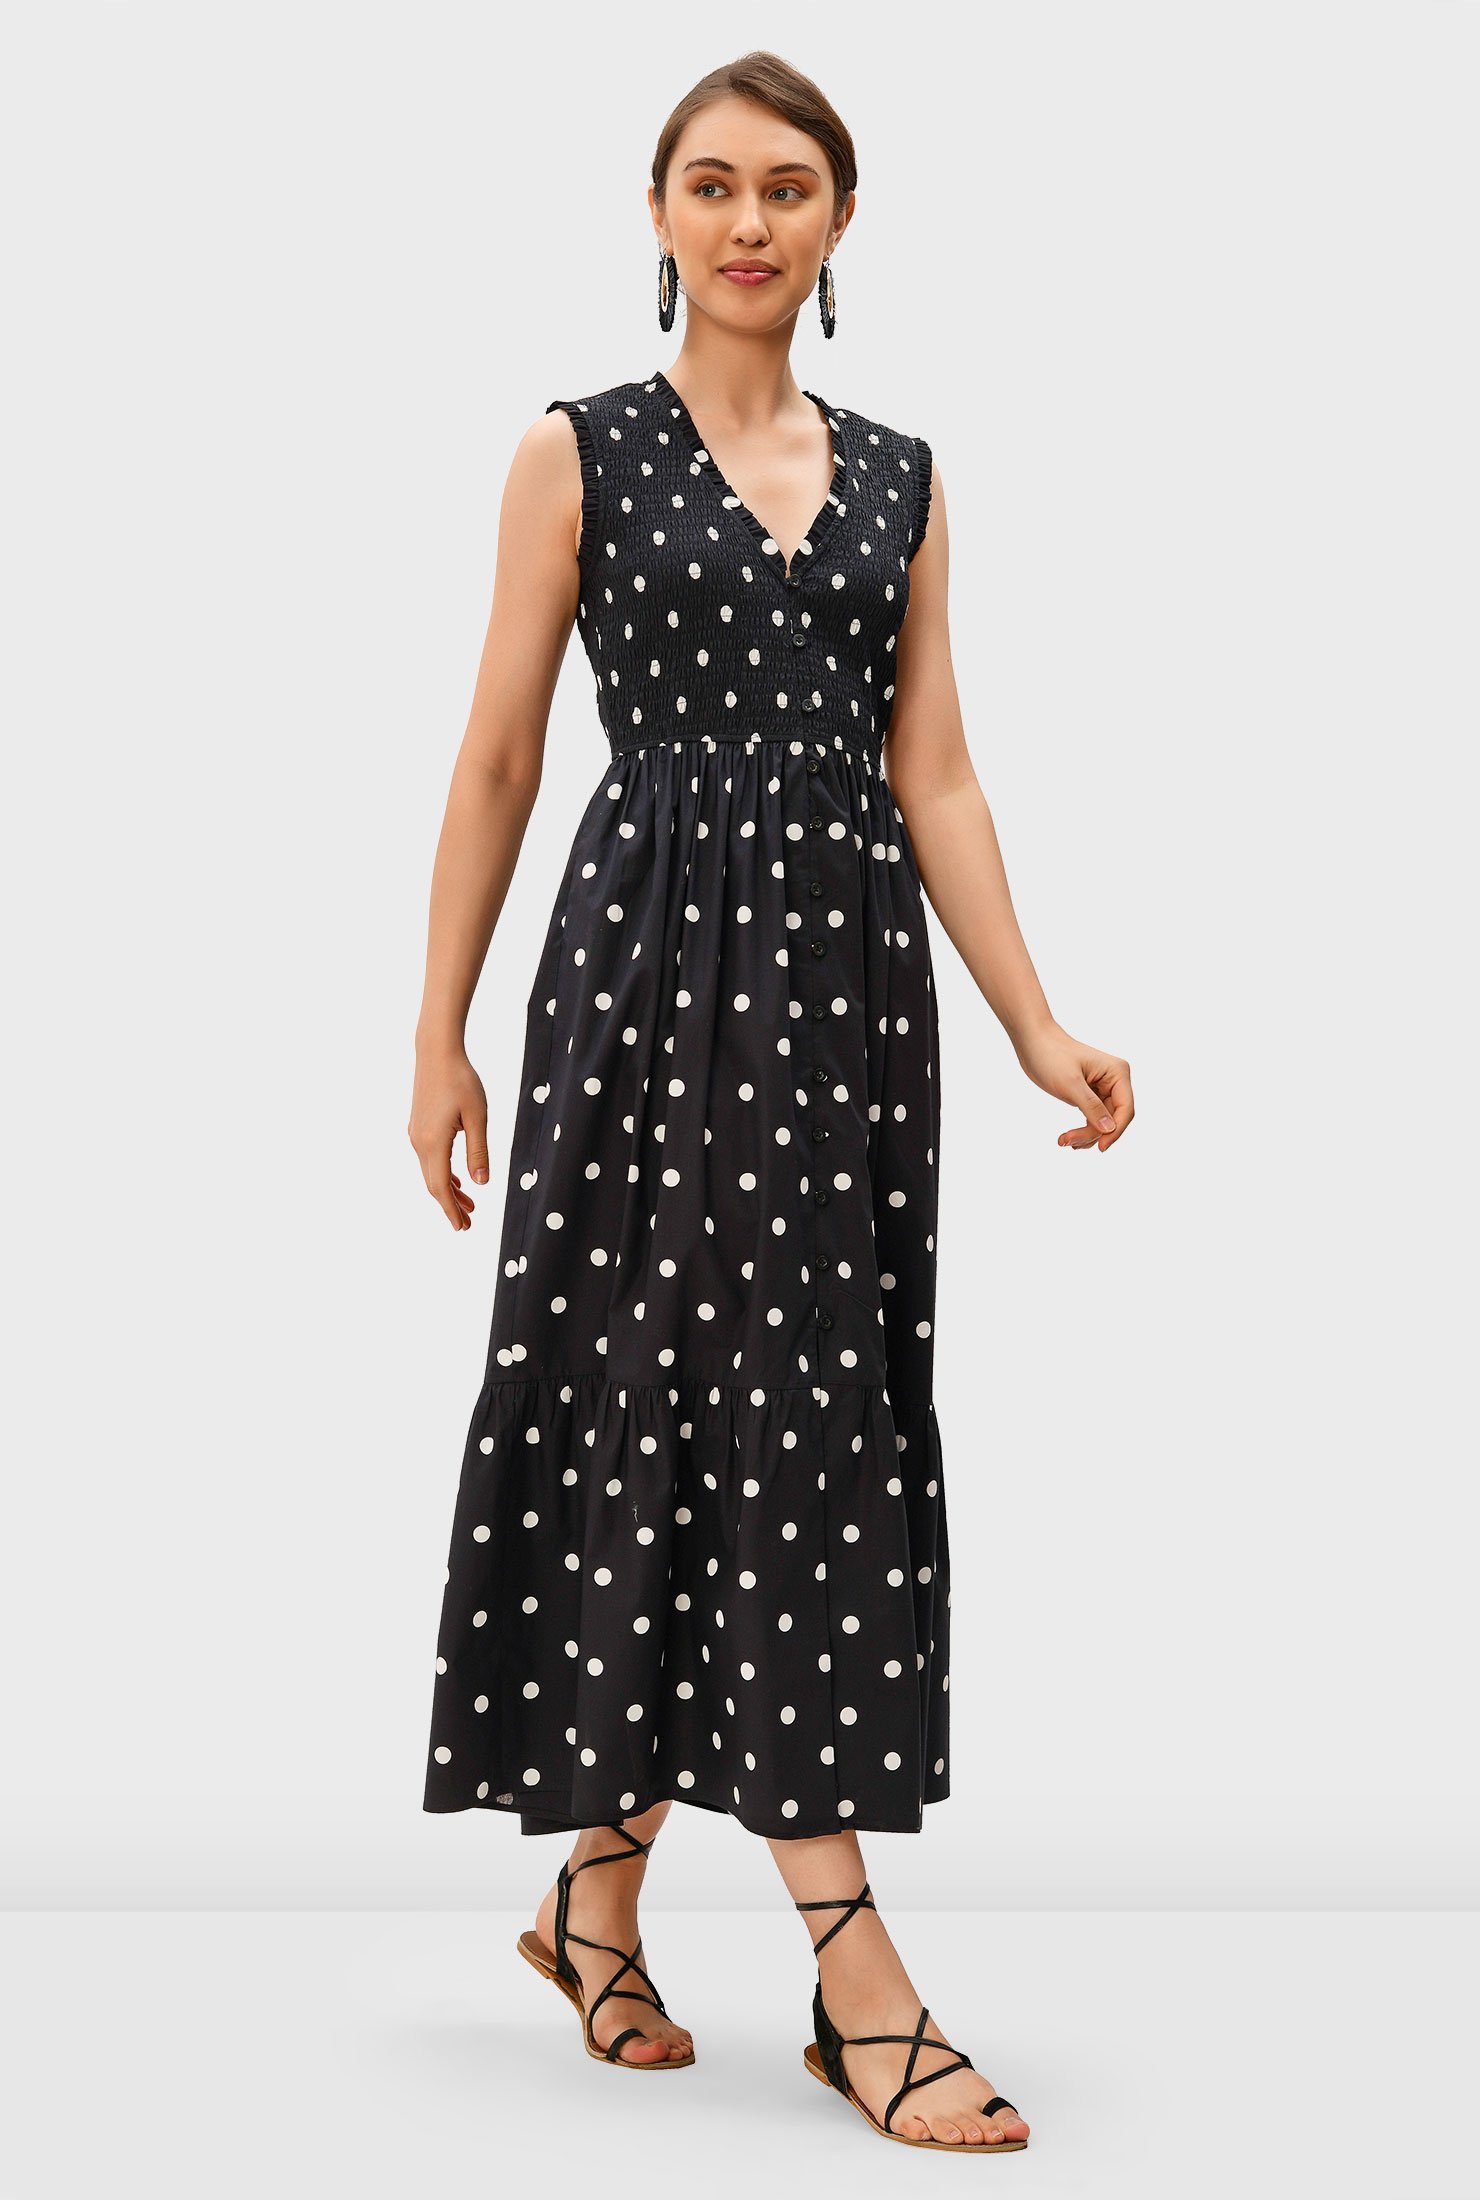 Shop Smocked polka dot print cotton poplin shirtdress | eShakti